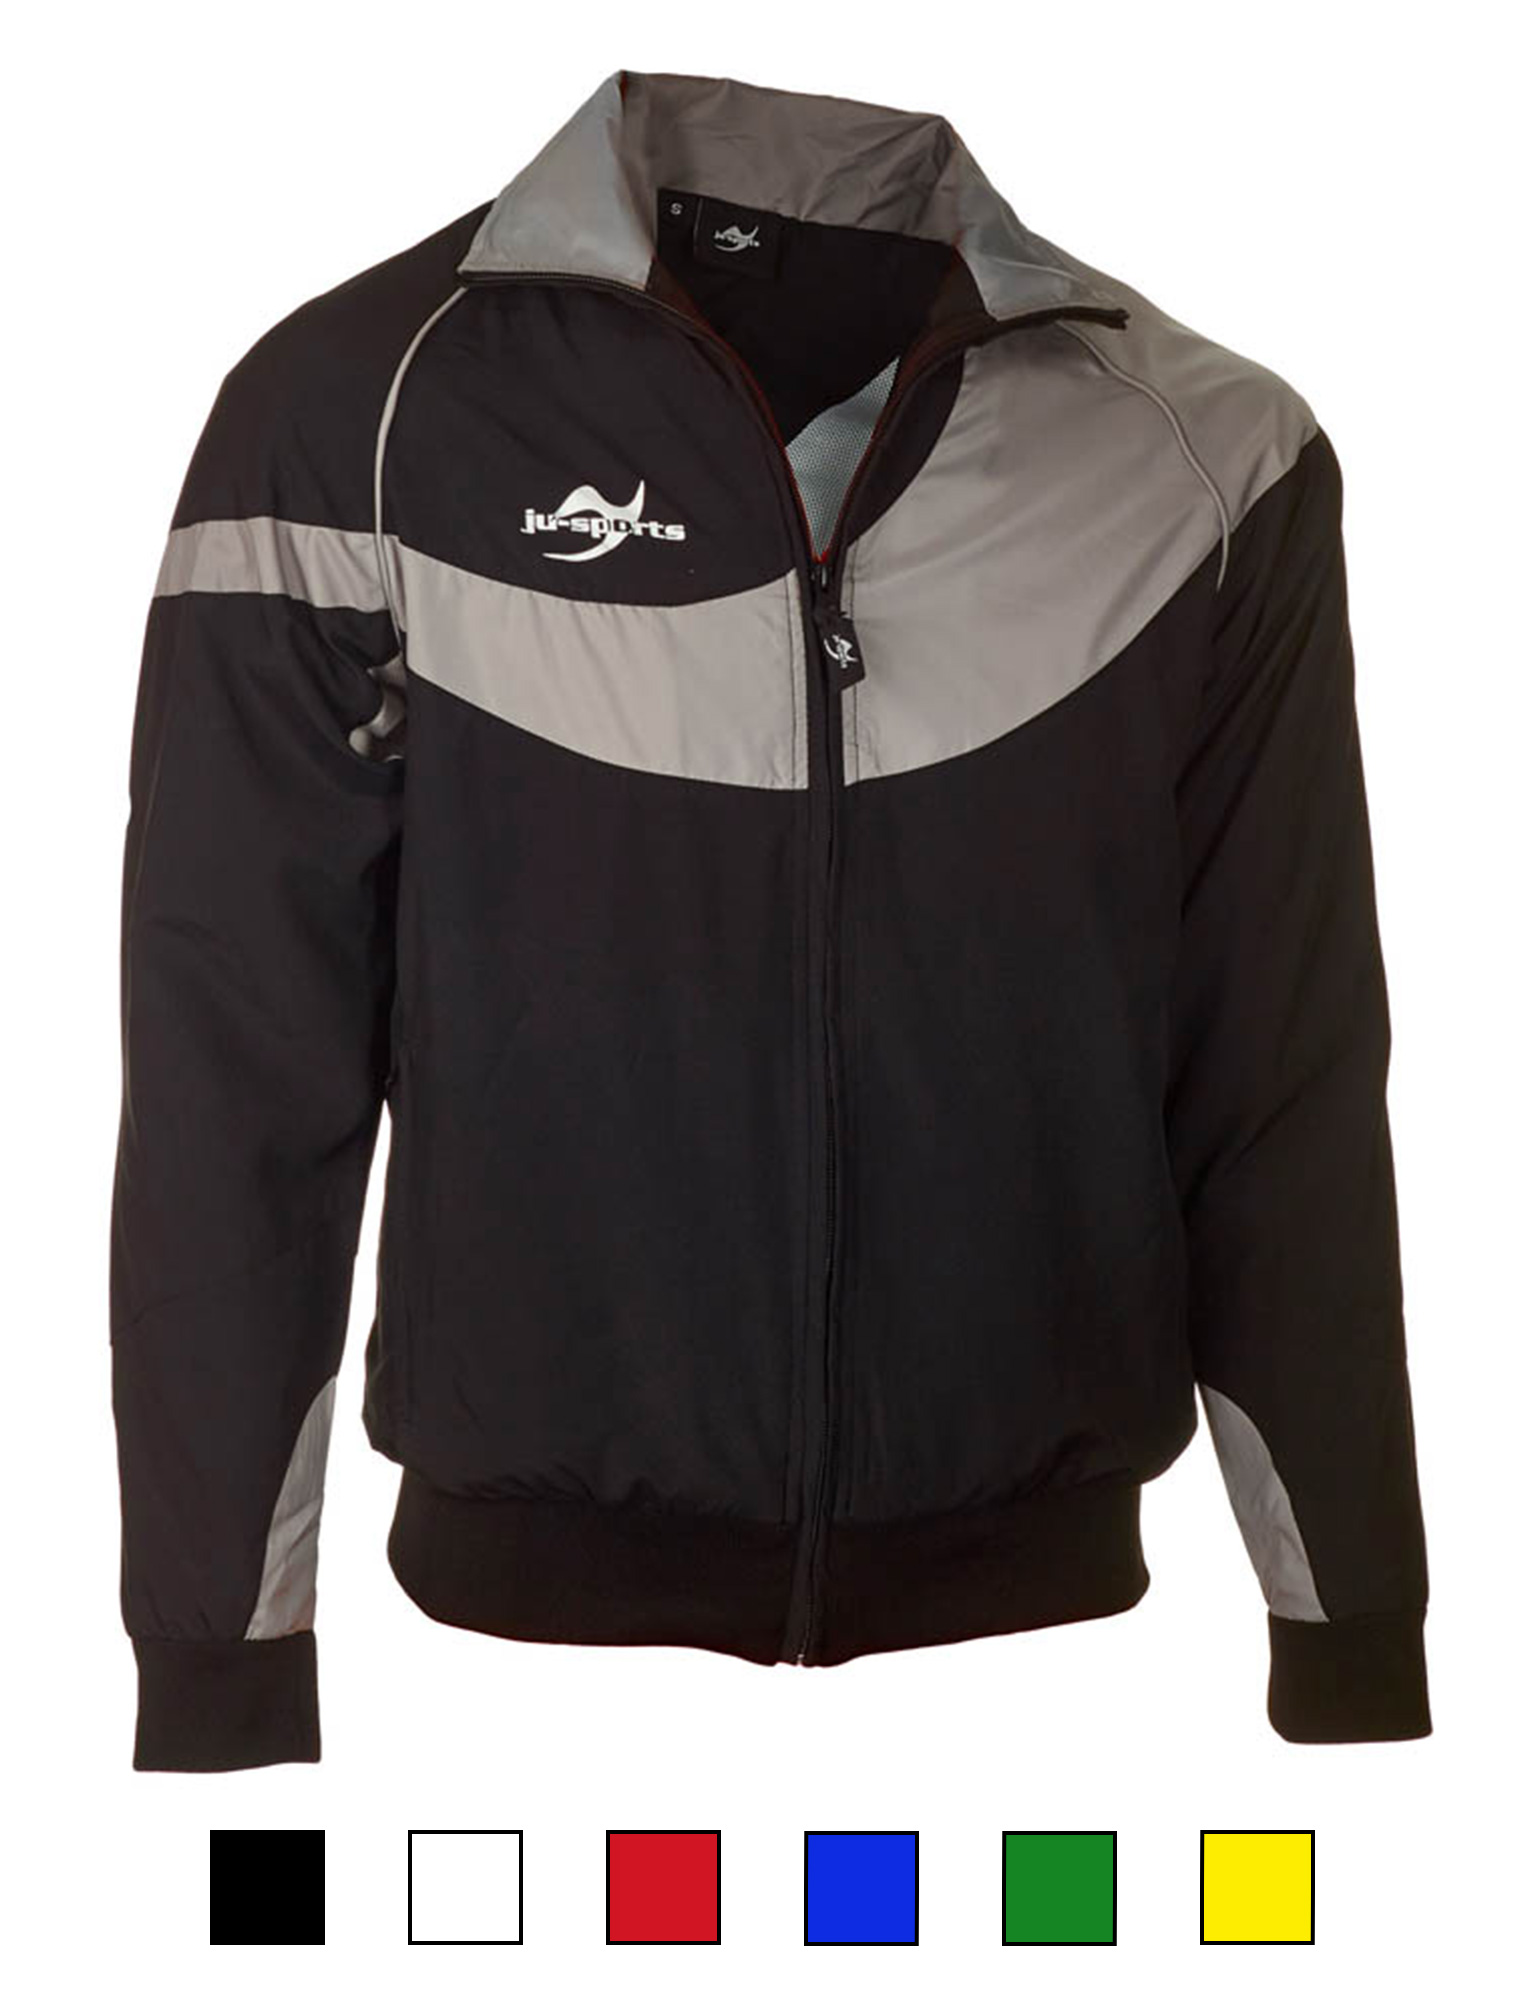 Ju-Sports C1 zip-up team jacket black/grey